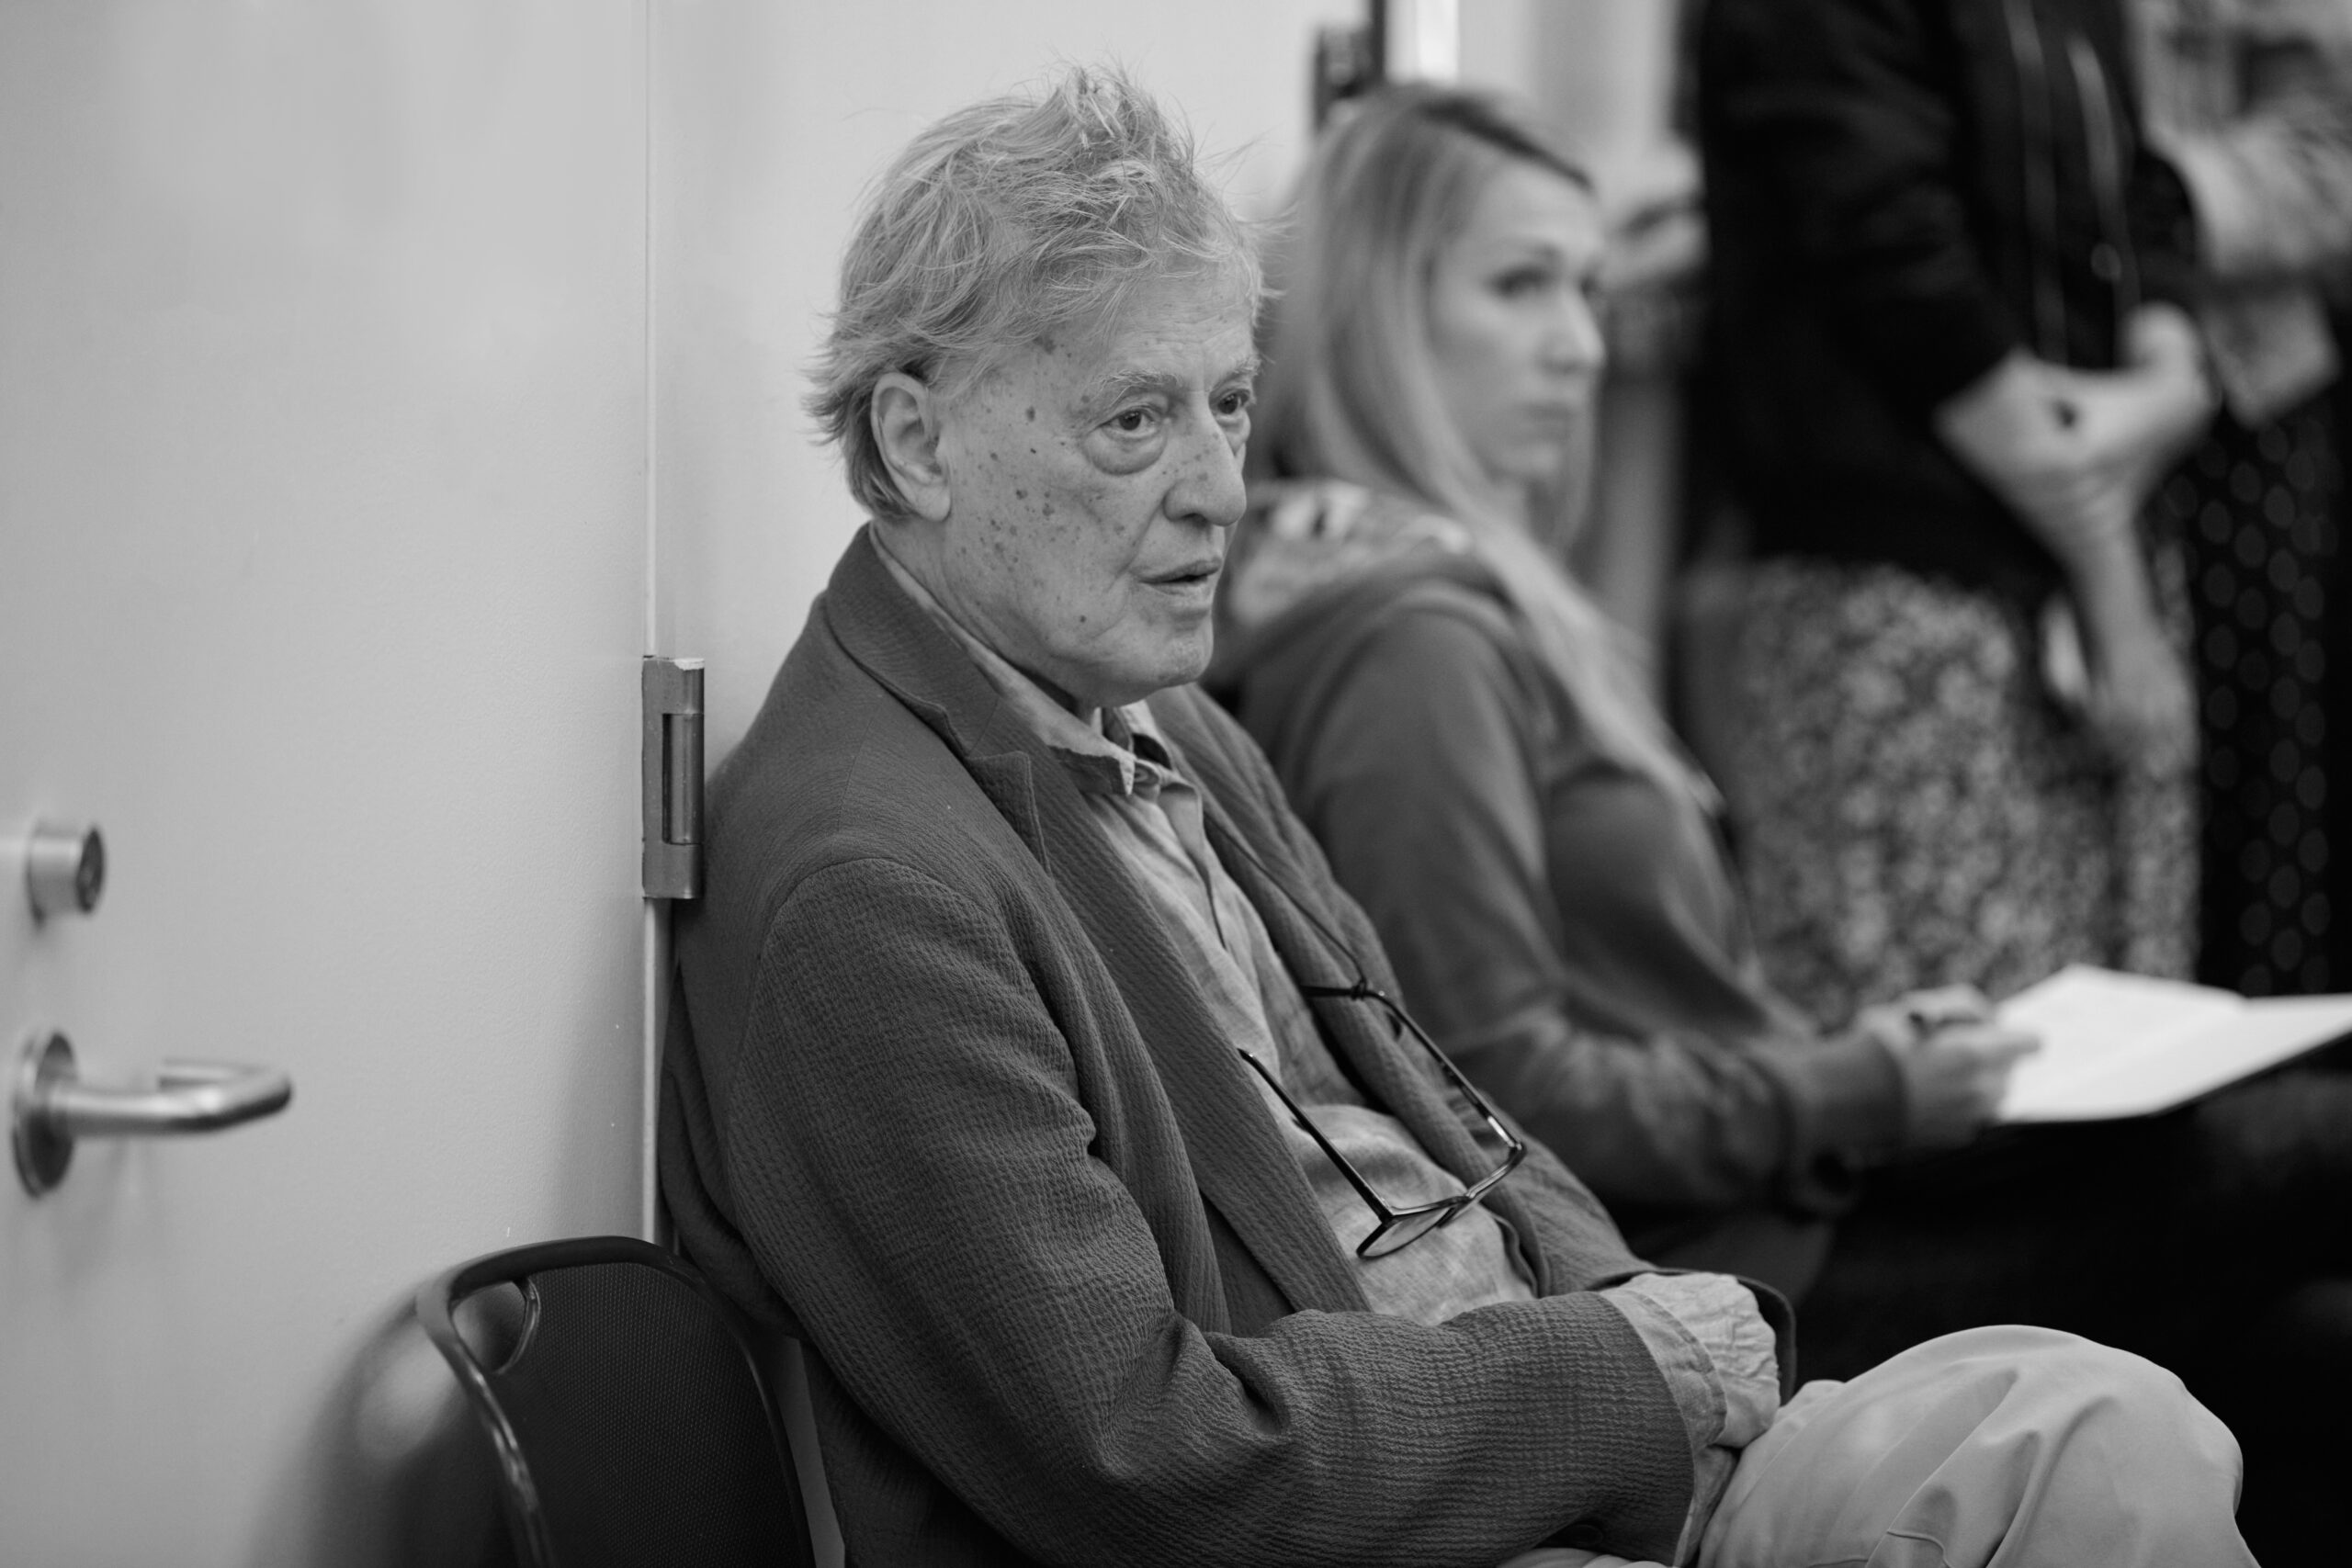 Tom Stoppard, Leopoldstadt playwright. Photo by Jenny Anderson.